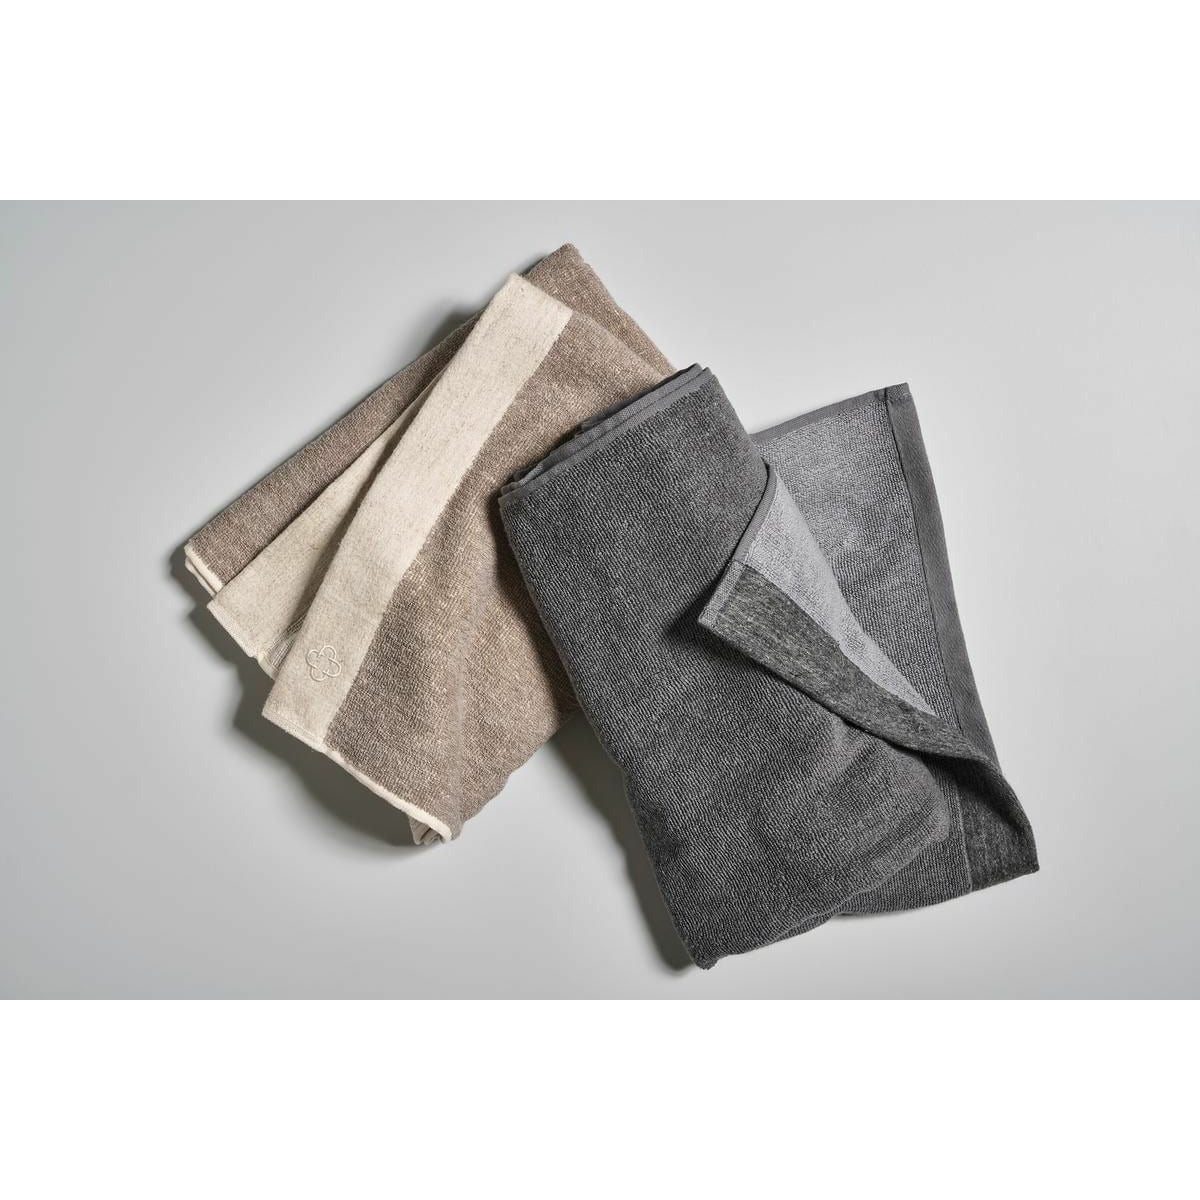 Zone Denmark Inu spa handdoek 140 x70 cm, grijs